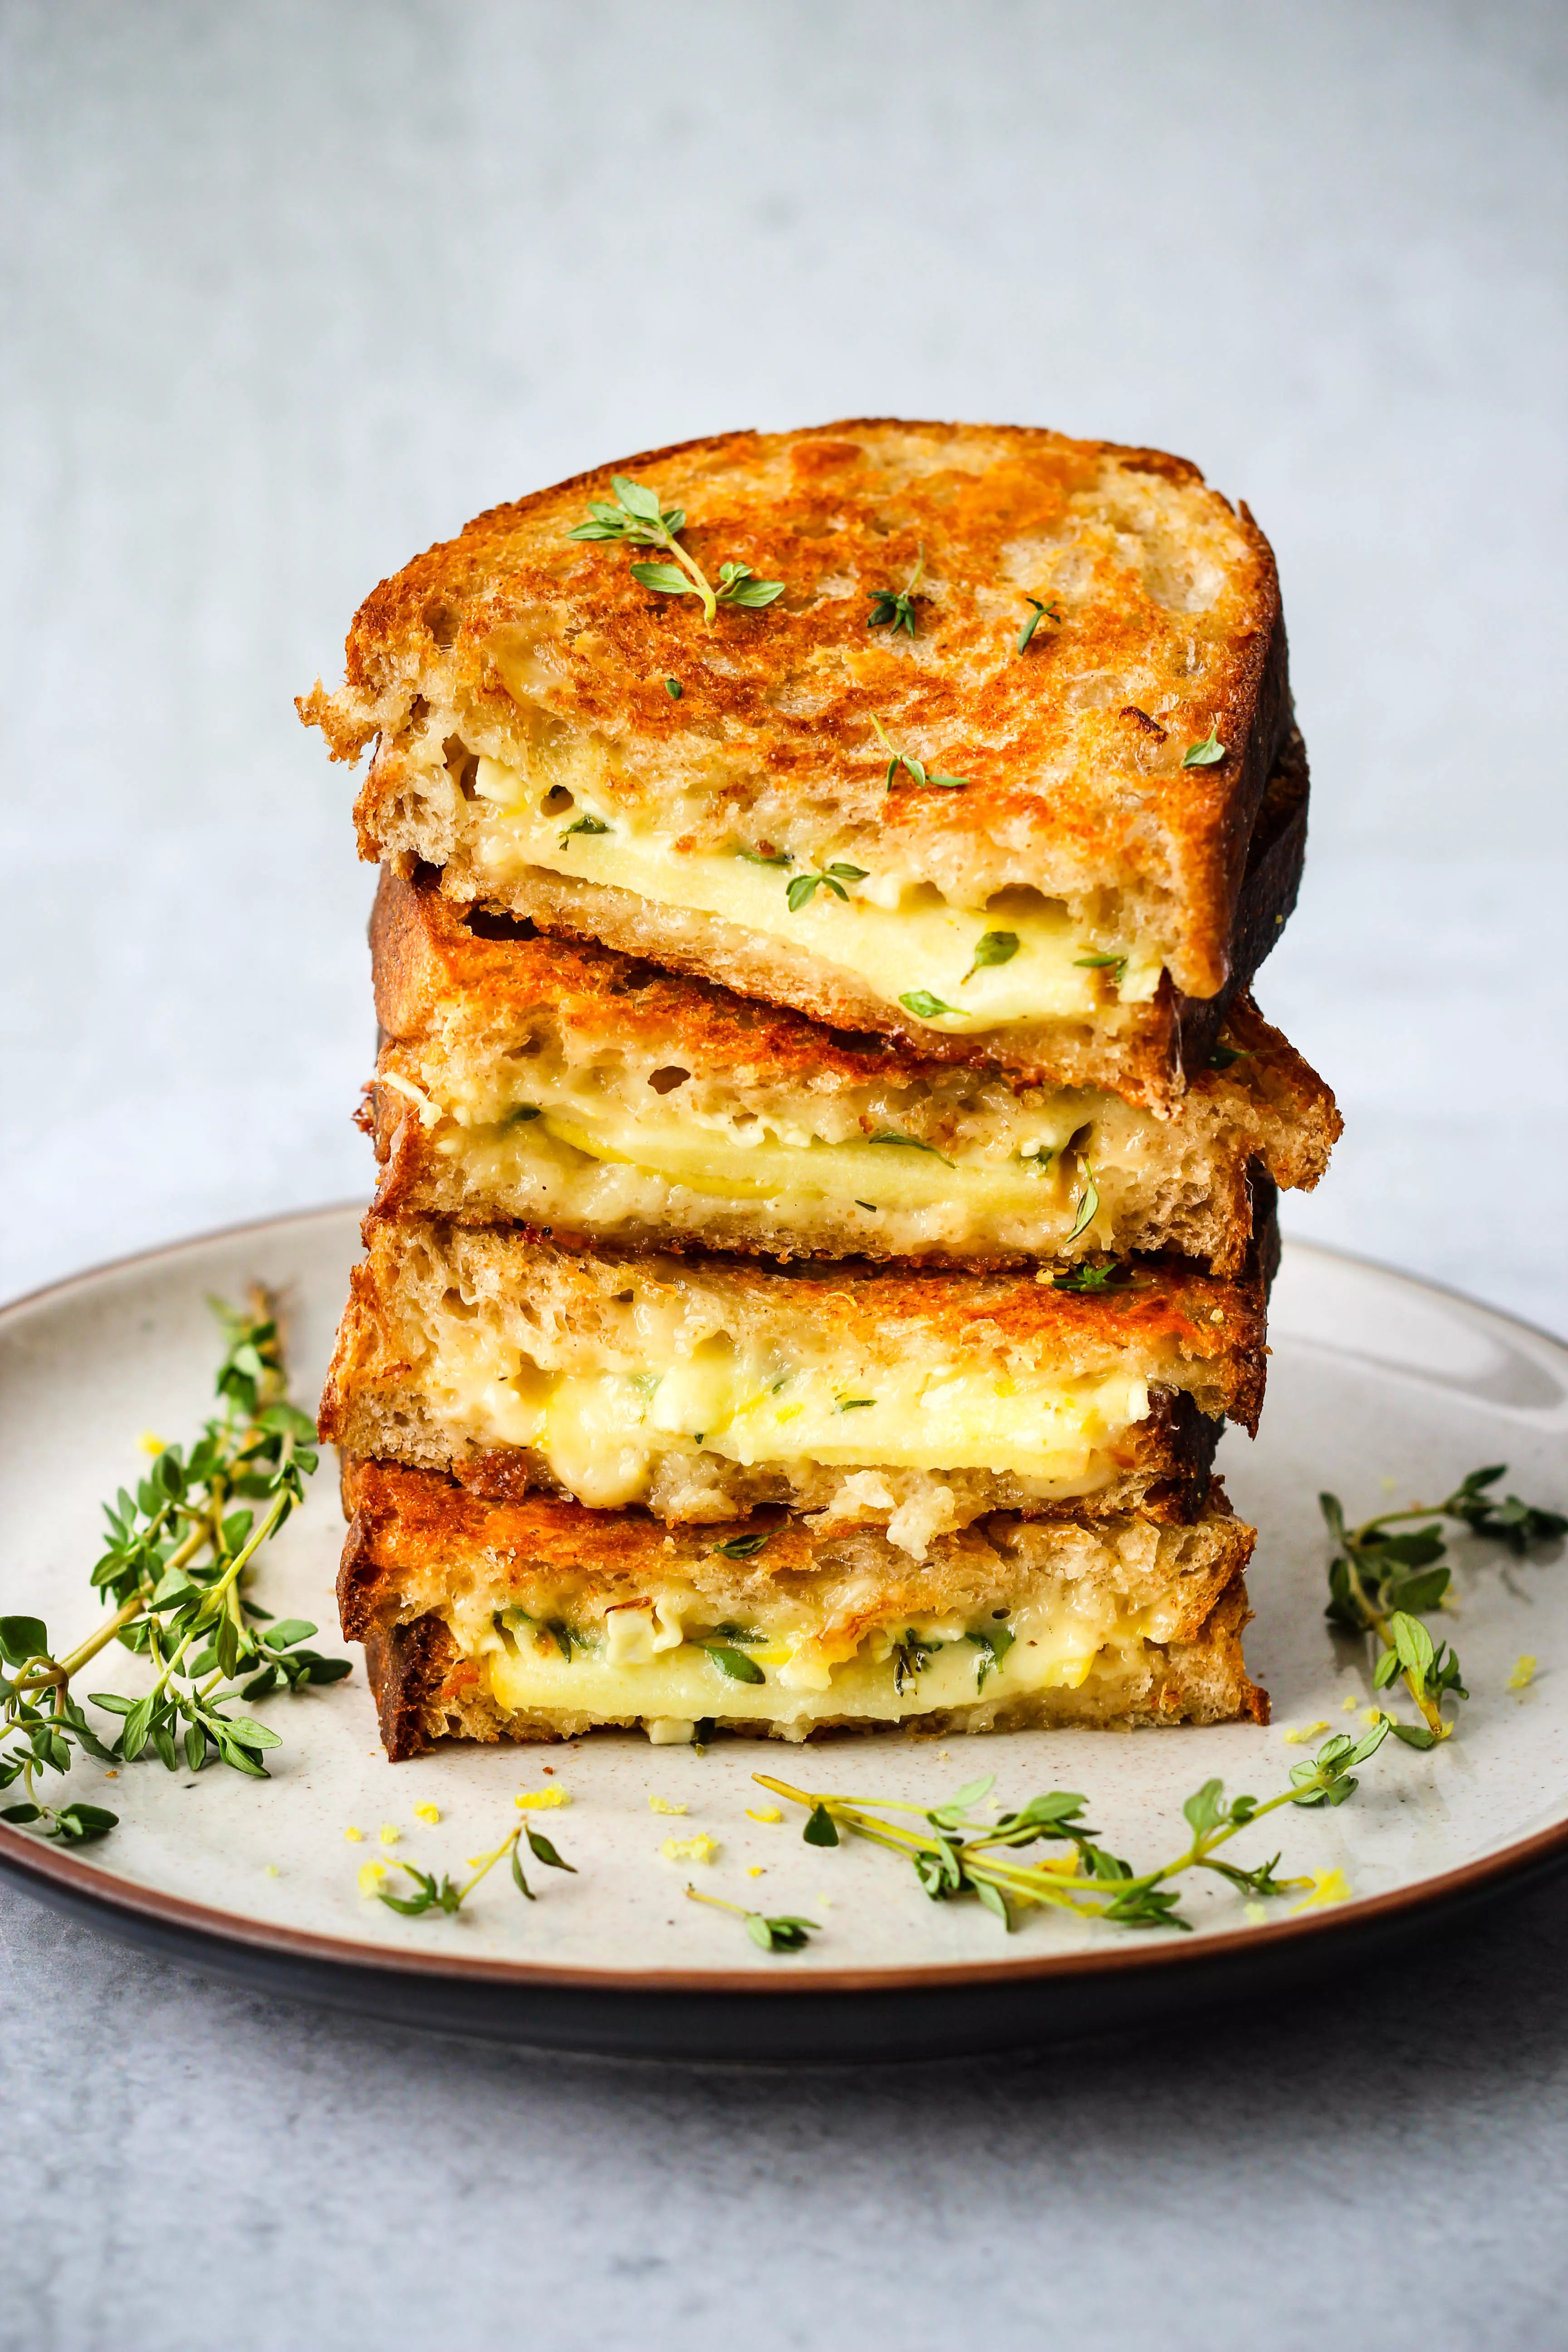 https://www.walderwellness.com/wp-content/uploads/2019/10/Gourmet-Grilled-Cheese-Sandwich-Walder-Wellness-5.jpg